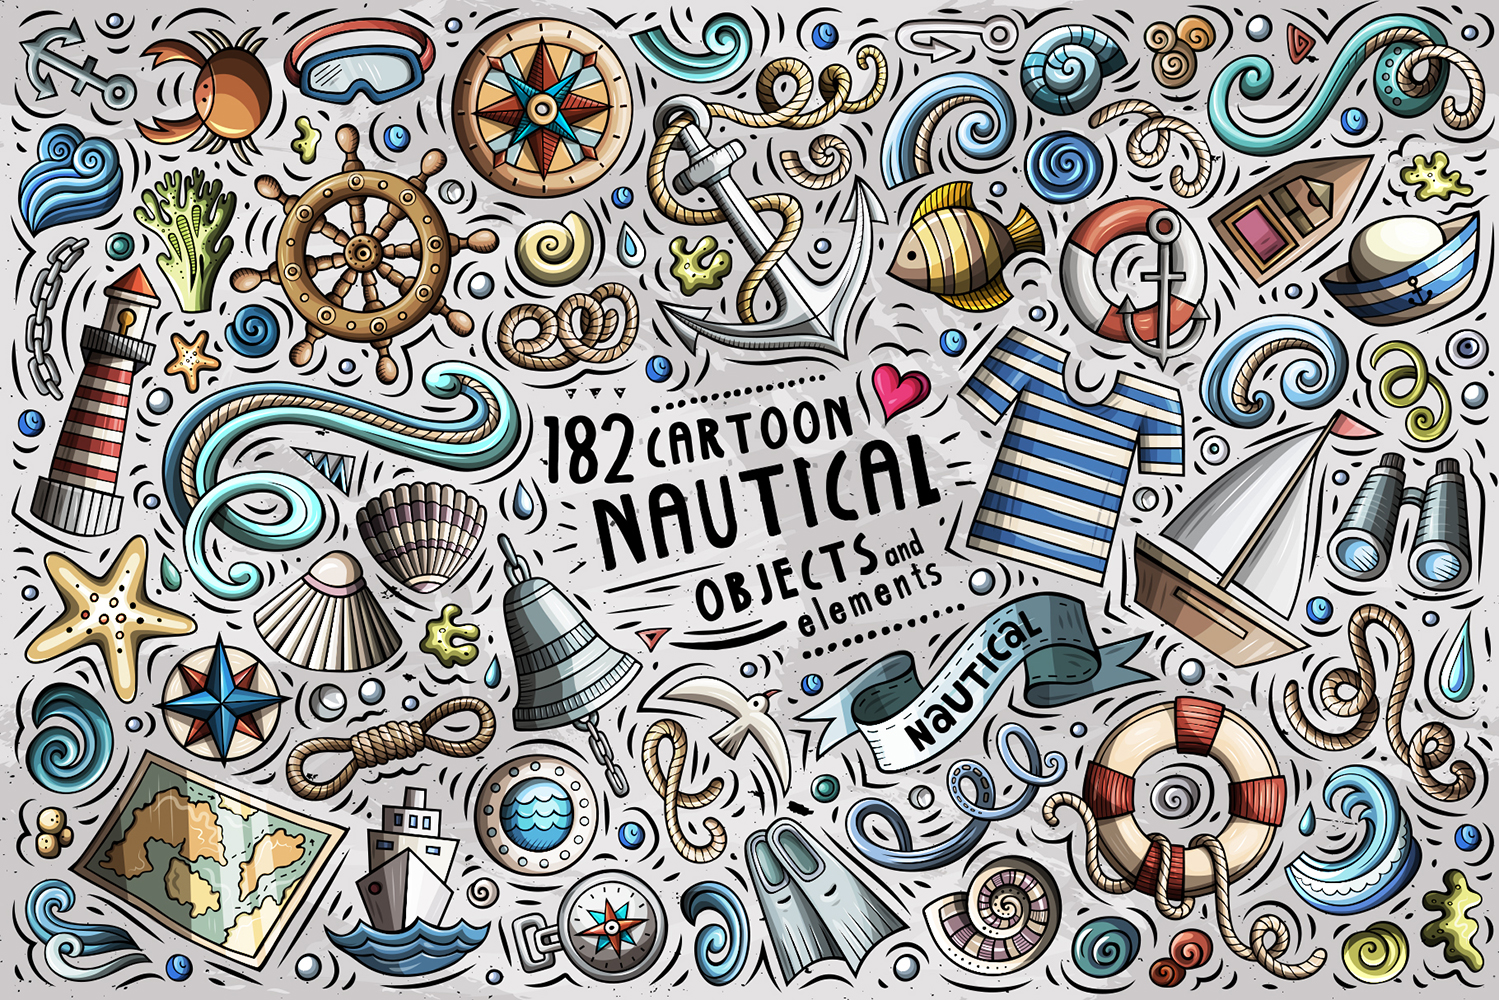 Nautical Cartoon Doodle Objects Set - Vector Image